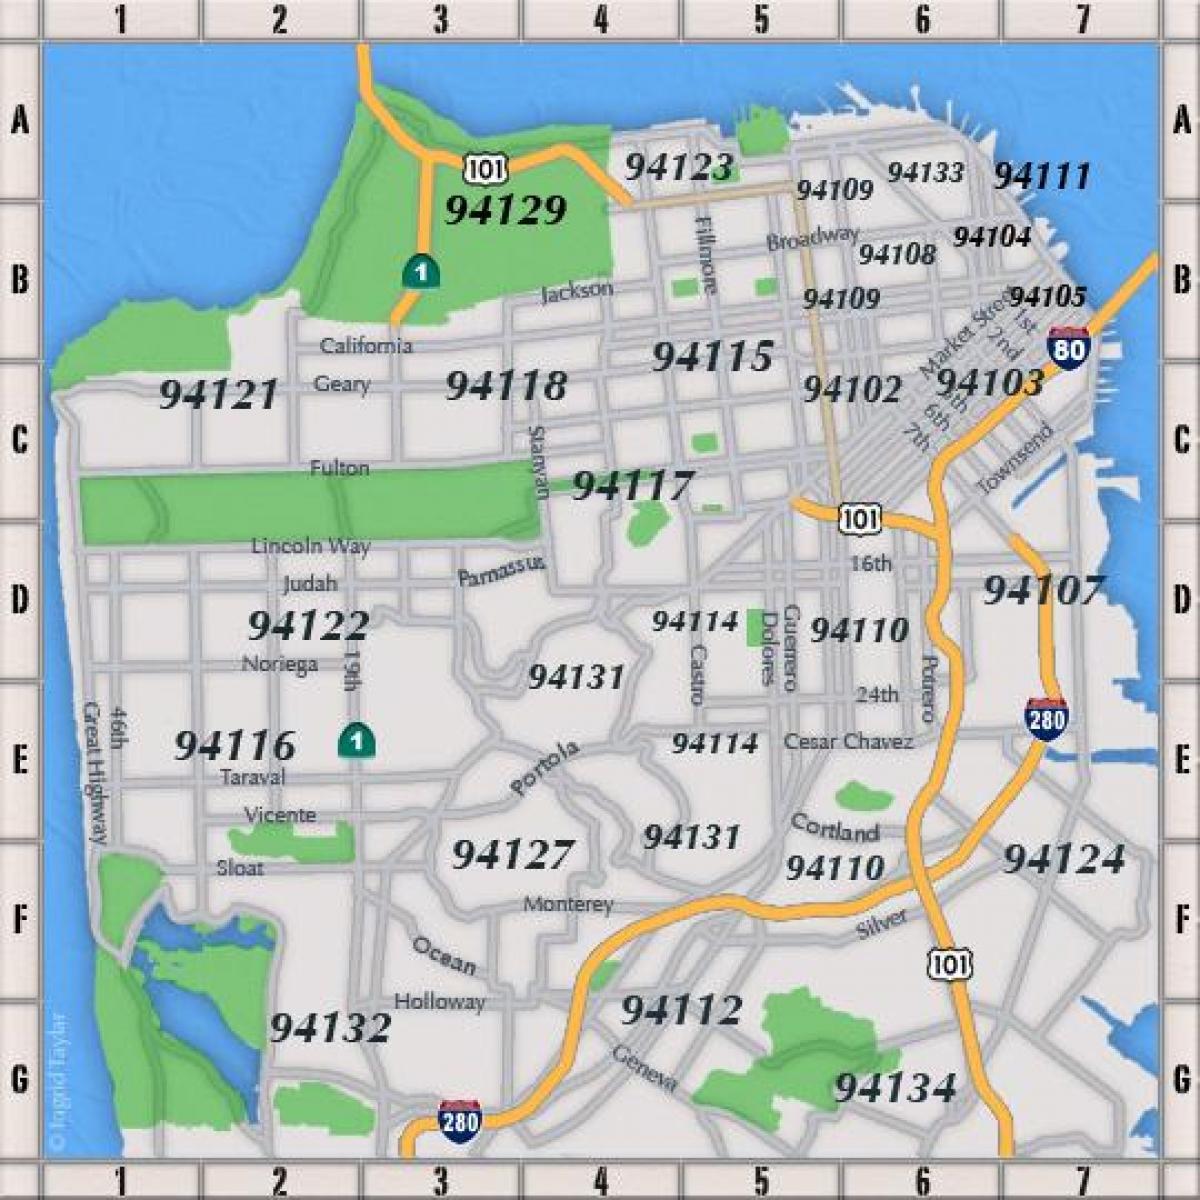 San Francisko kodi postar hartë